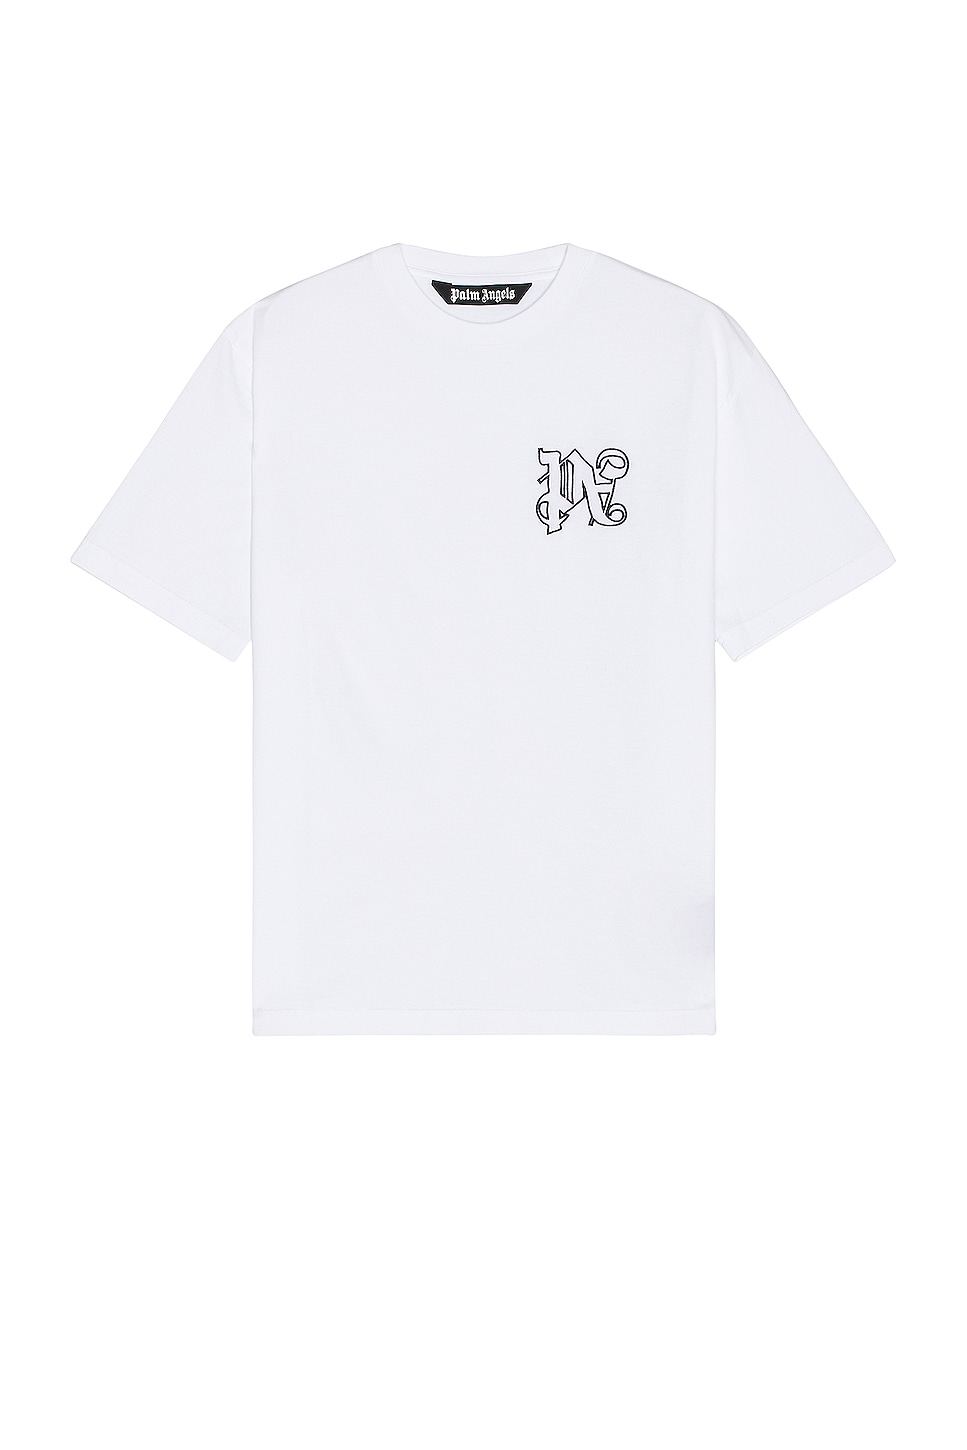 Palm Angels Black Monogram Shirt